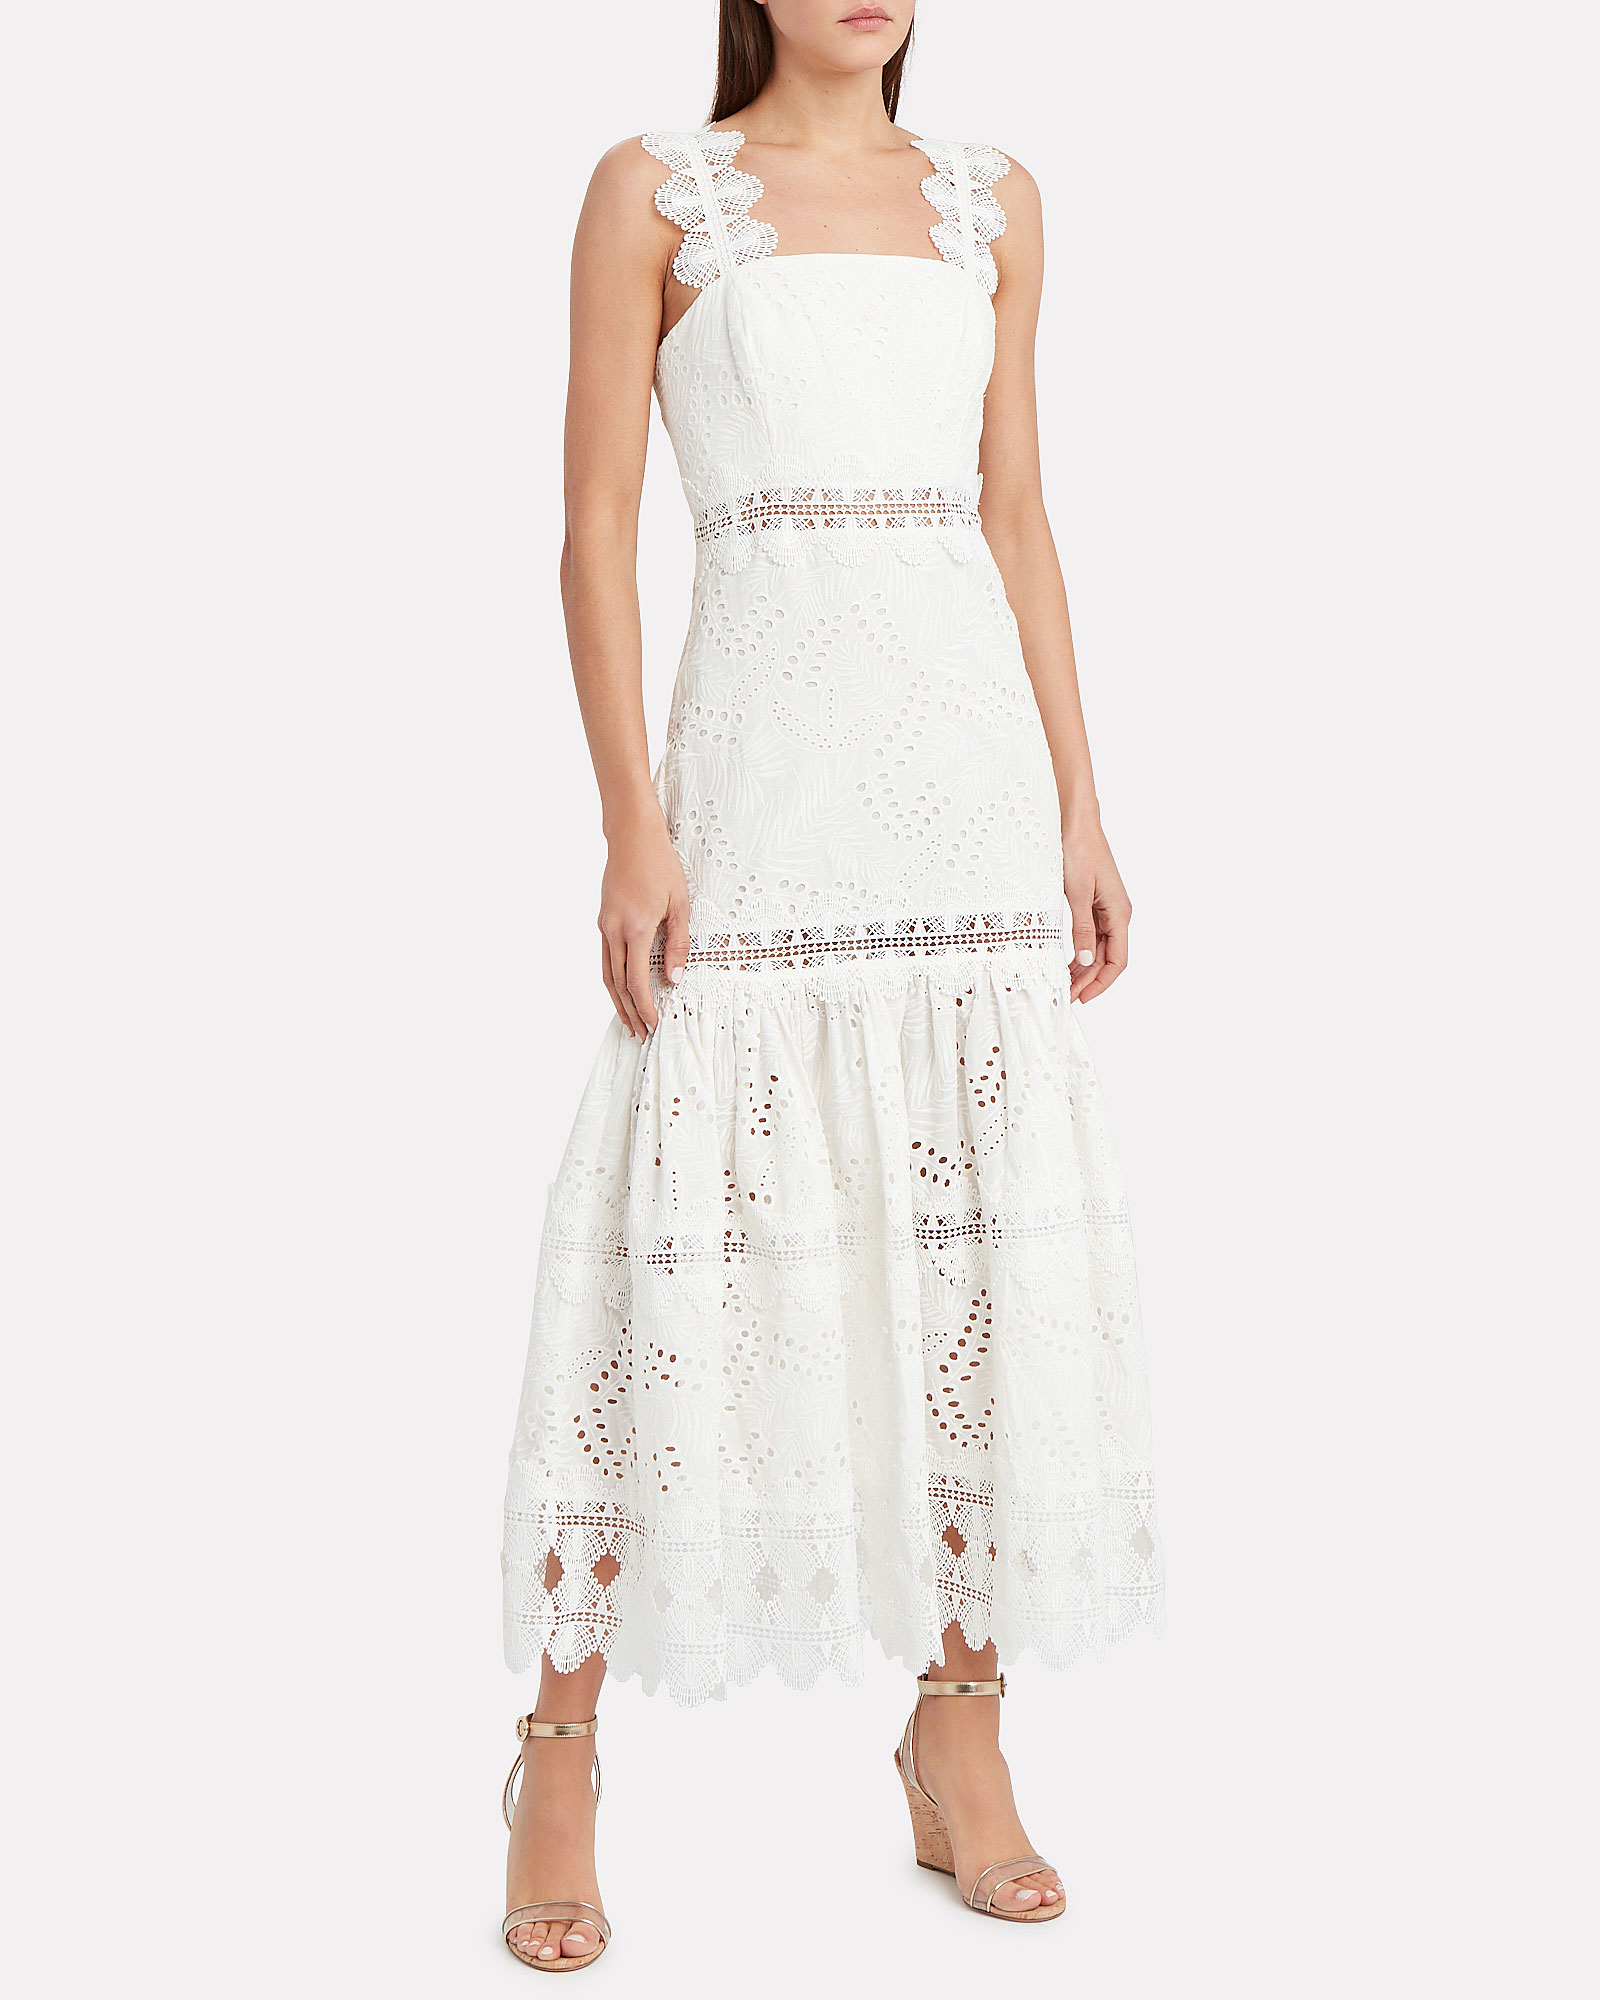 Waimari | Sireneuse Embroidered Cotton Dress | INTERMIX®